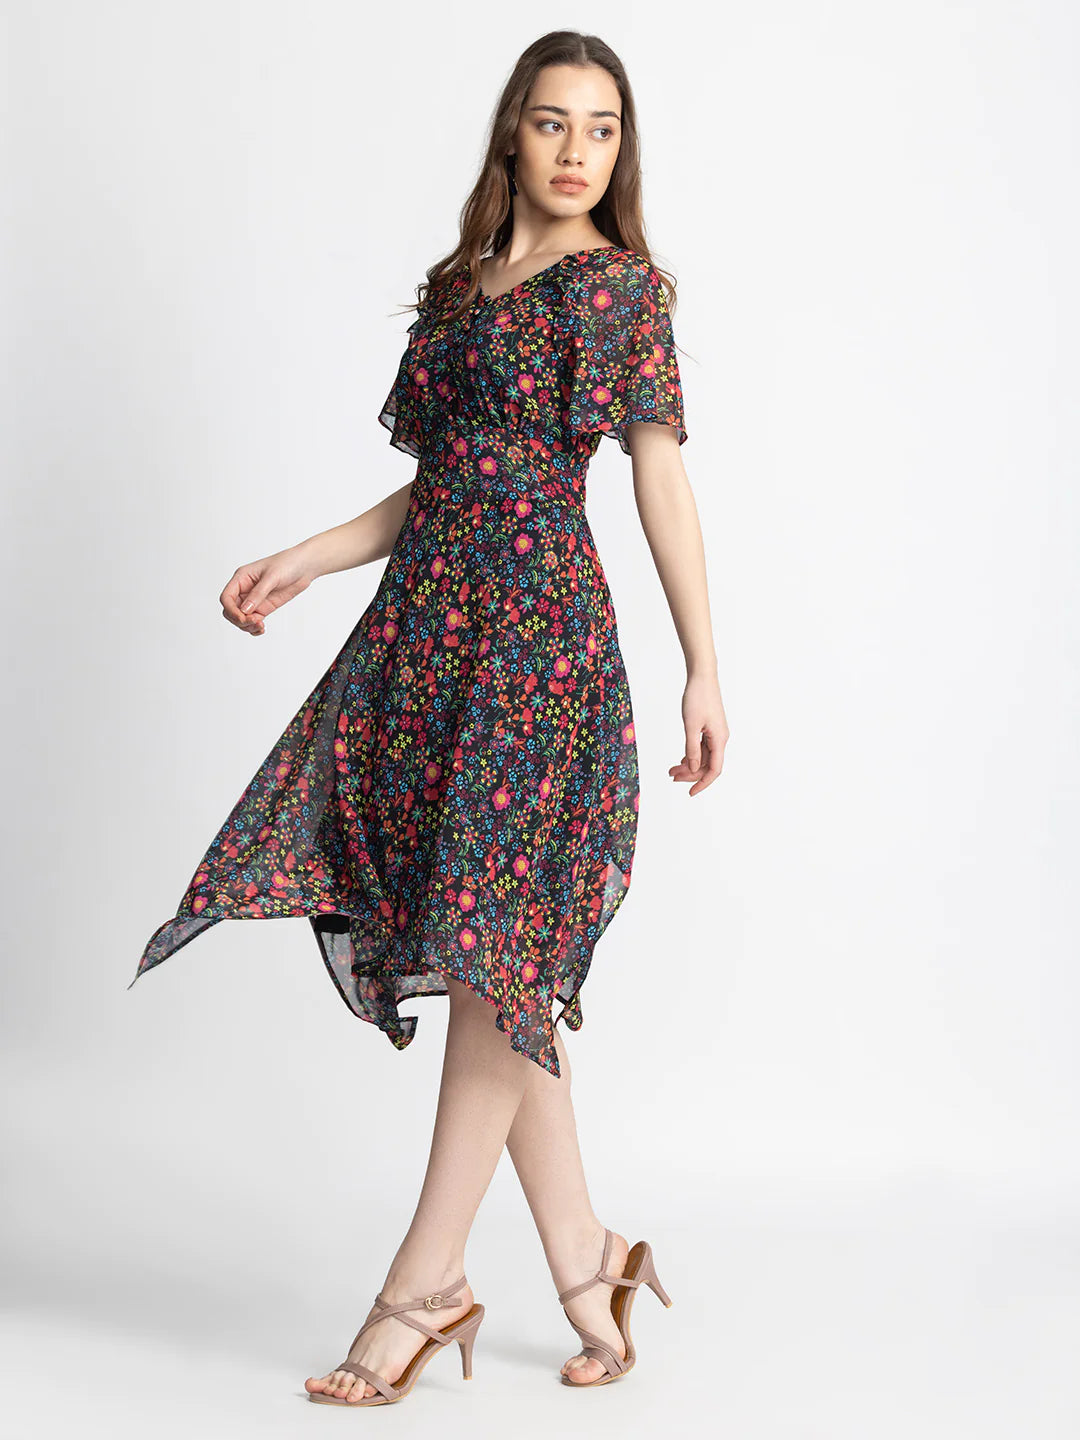 Liberty Floral Dress | Romantic Liberty Floral High-Low Dress